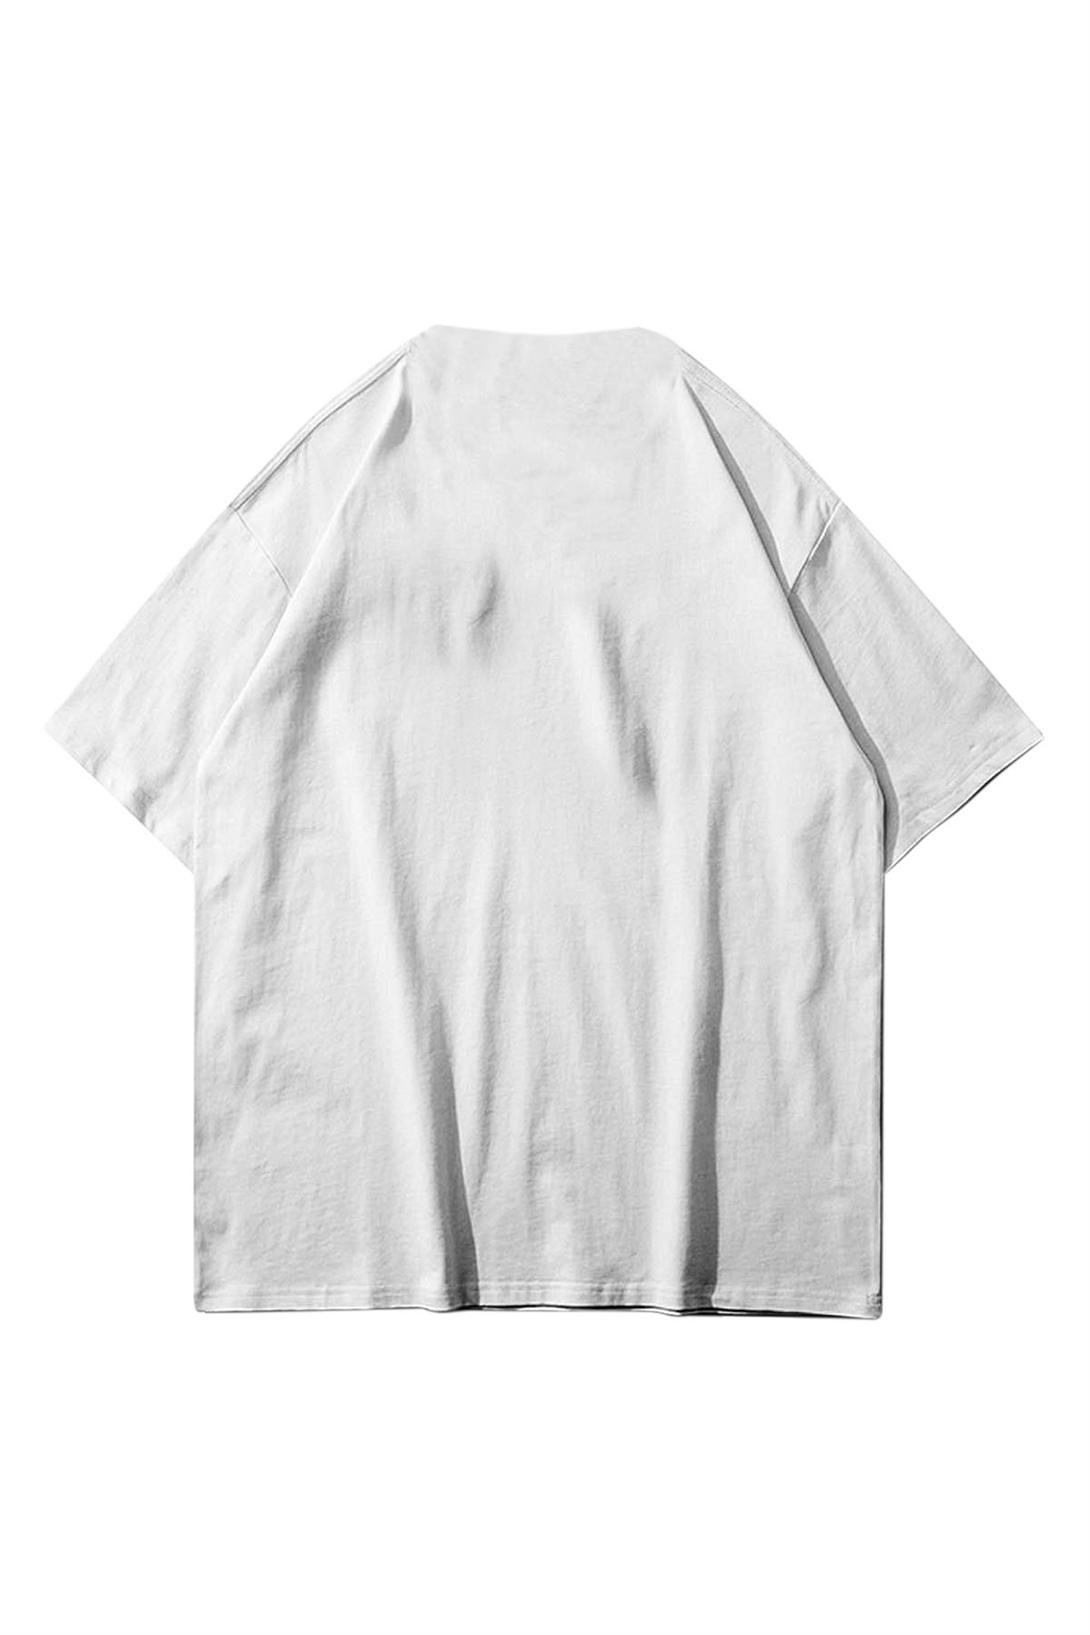 Trendiz Unisex  Drew Lolipop Beyaz Tshirt